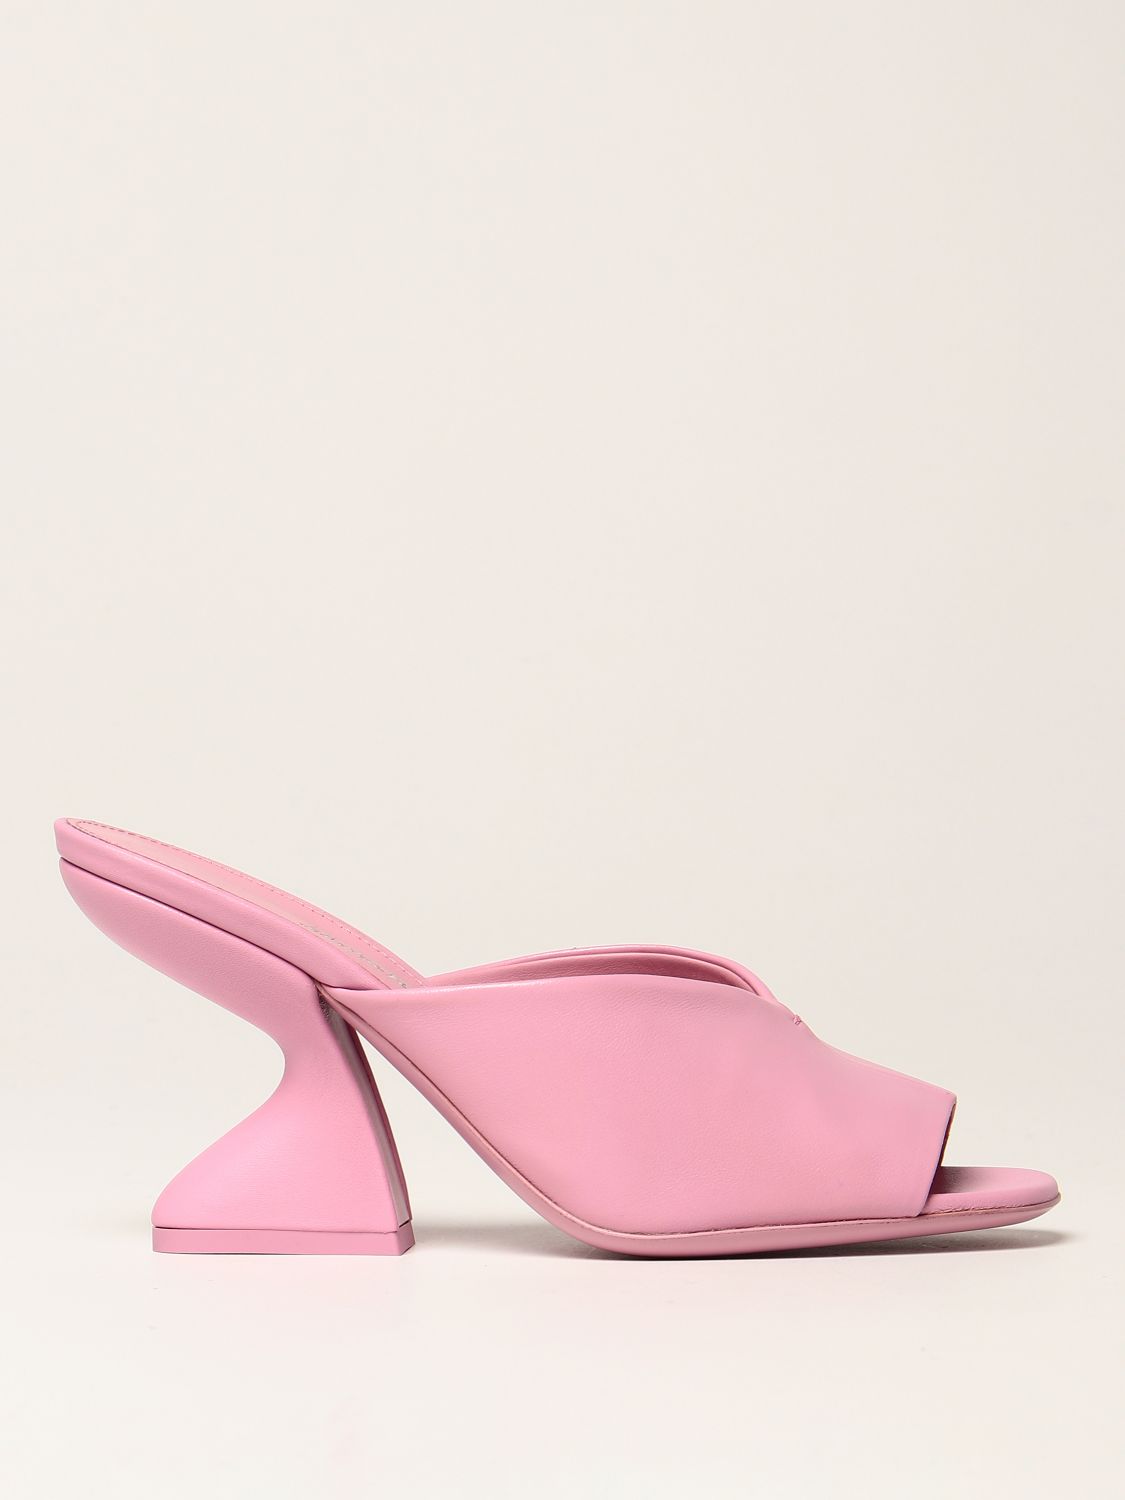 Босоножки на каблуке Salvatore Ferragamo: Обувь Женское Salvatore Ferragamo розовый 1